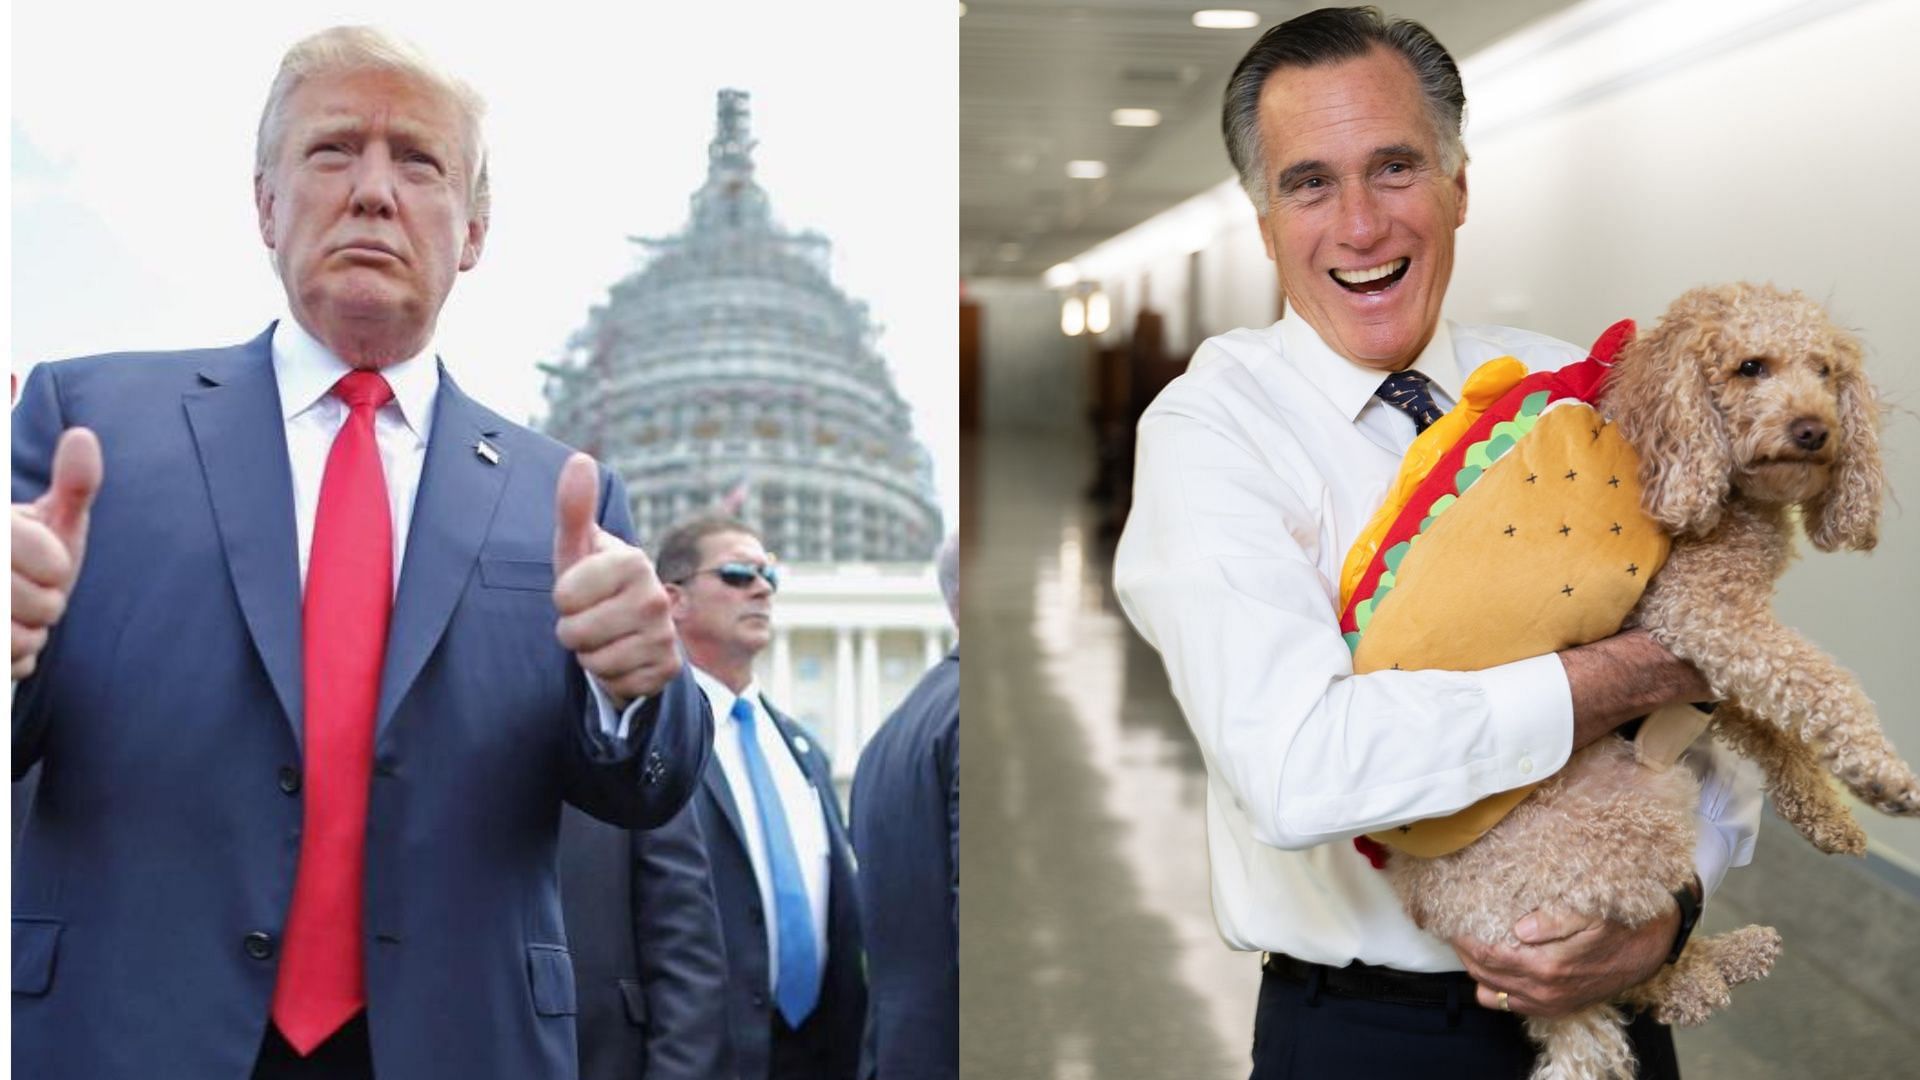 Mitt Romney criticized the former president on his measure regarding the border resolution (Image via Facebook / Donald J. Trump / Senator Mitt Romney)